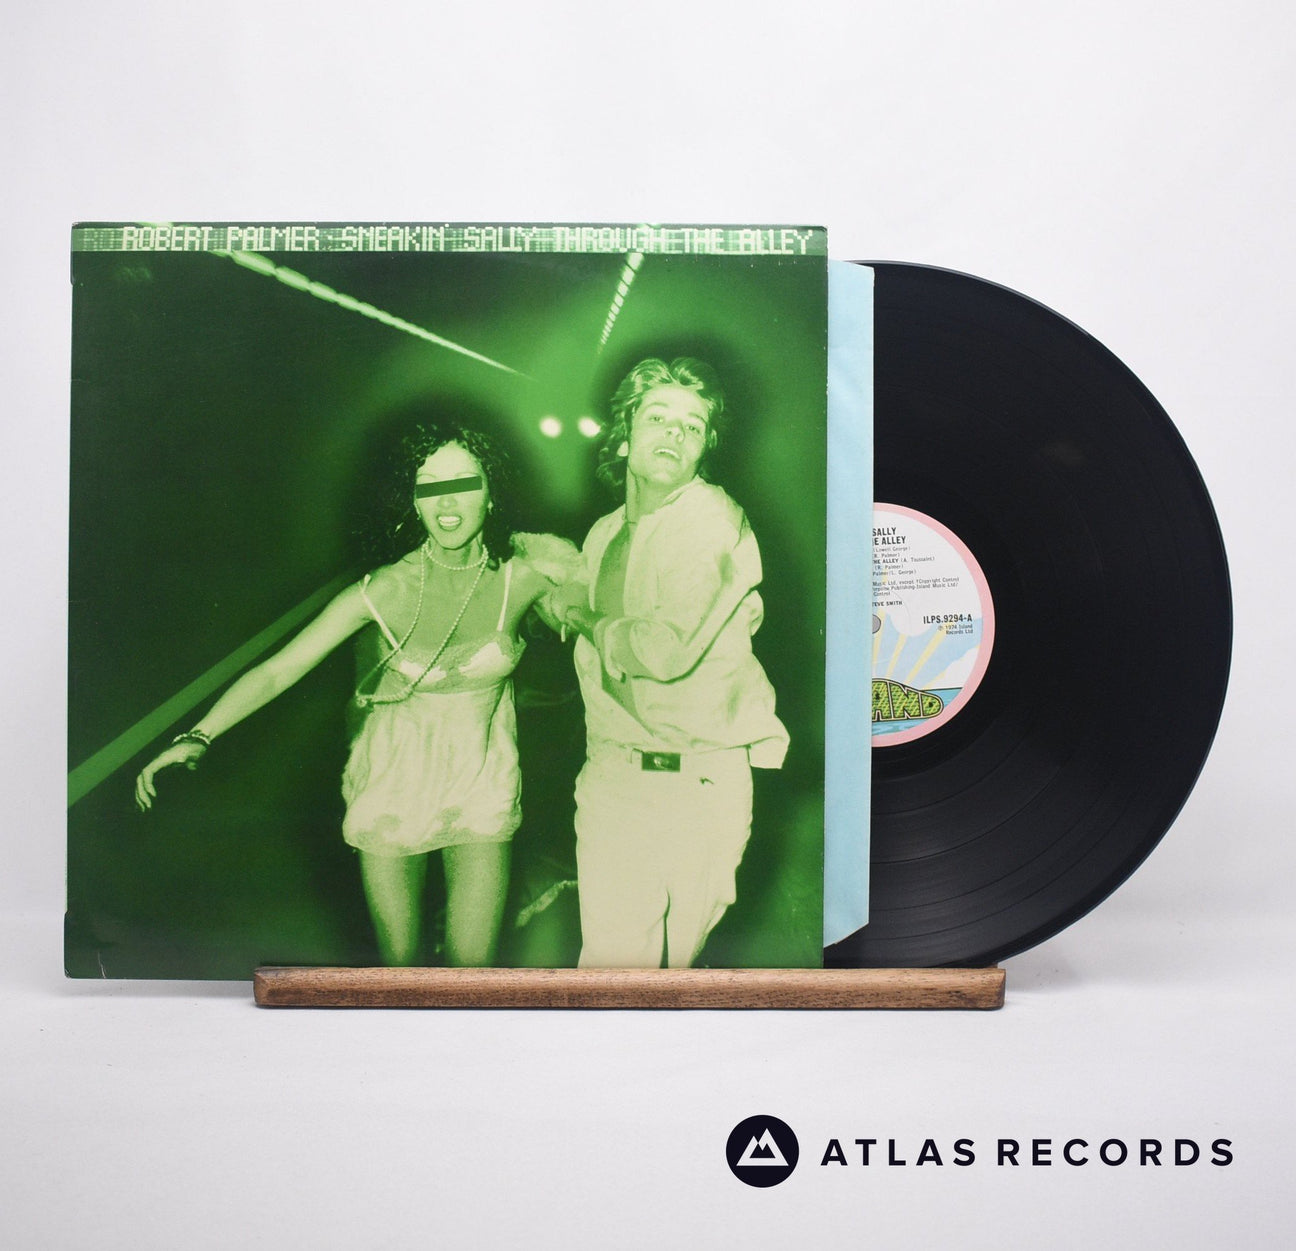 Robert Palmer Sneakin' Sally Through The Alley LP Vinyl Record - Front Cover & Record